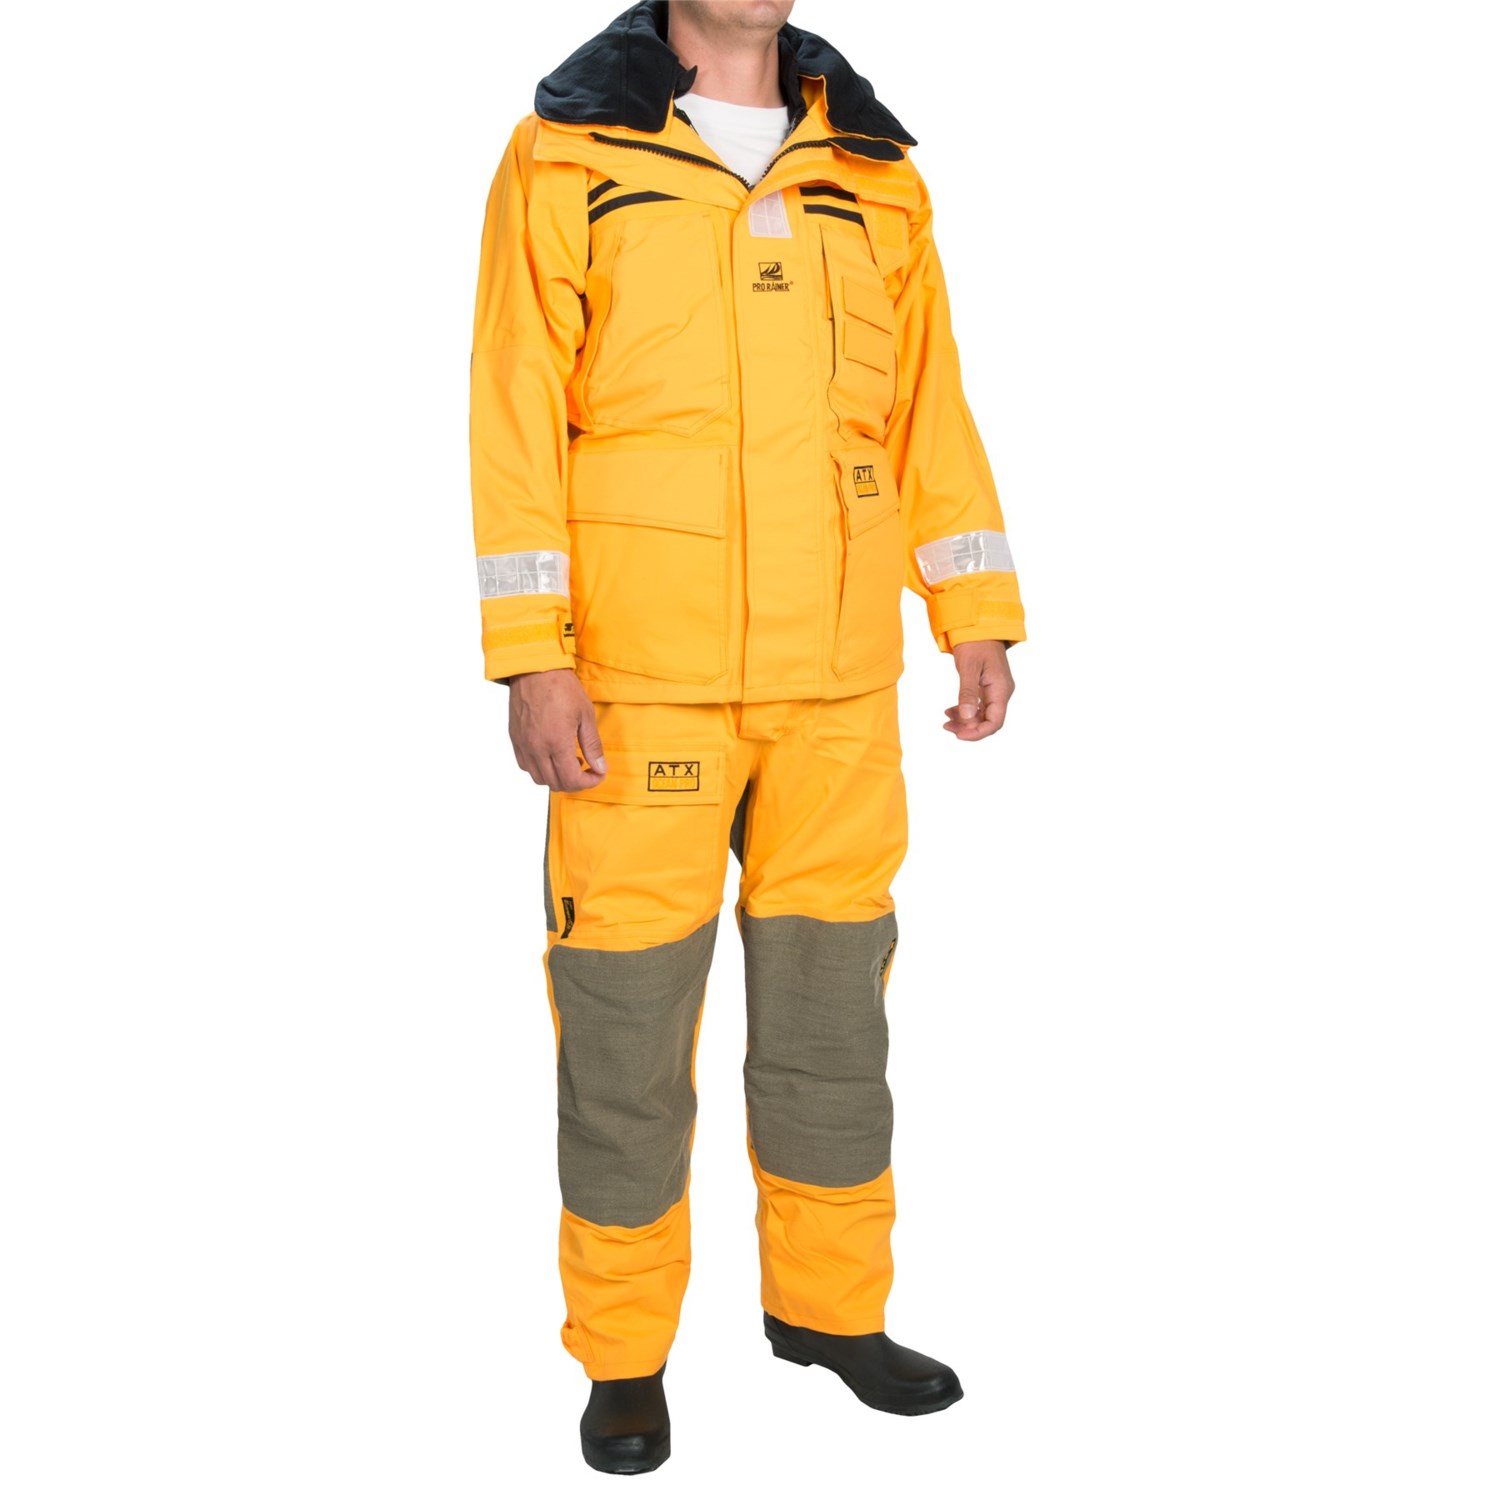 Tasmania Jacket (For Men) 9530N - Save 86%